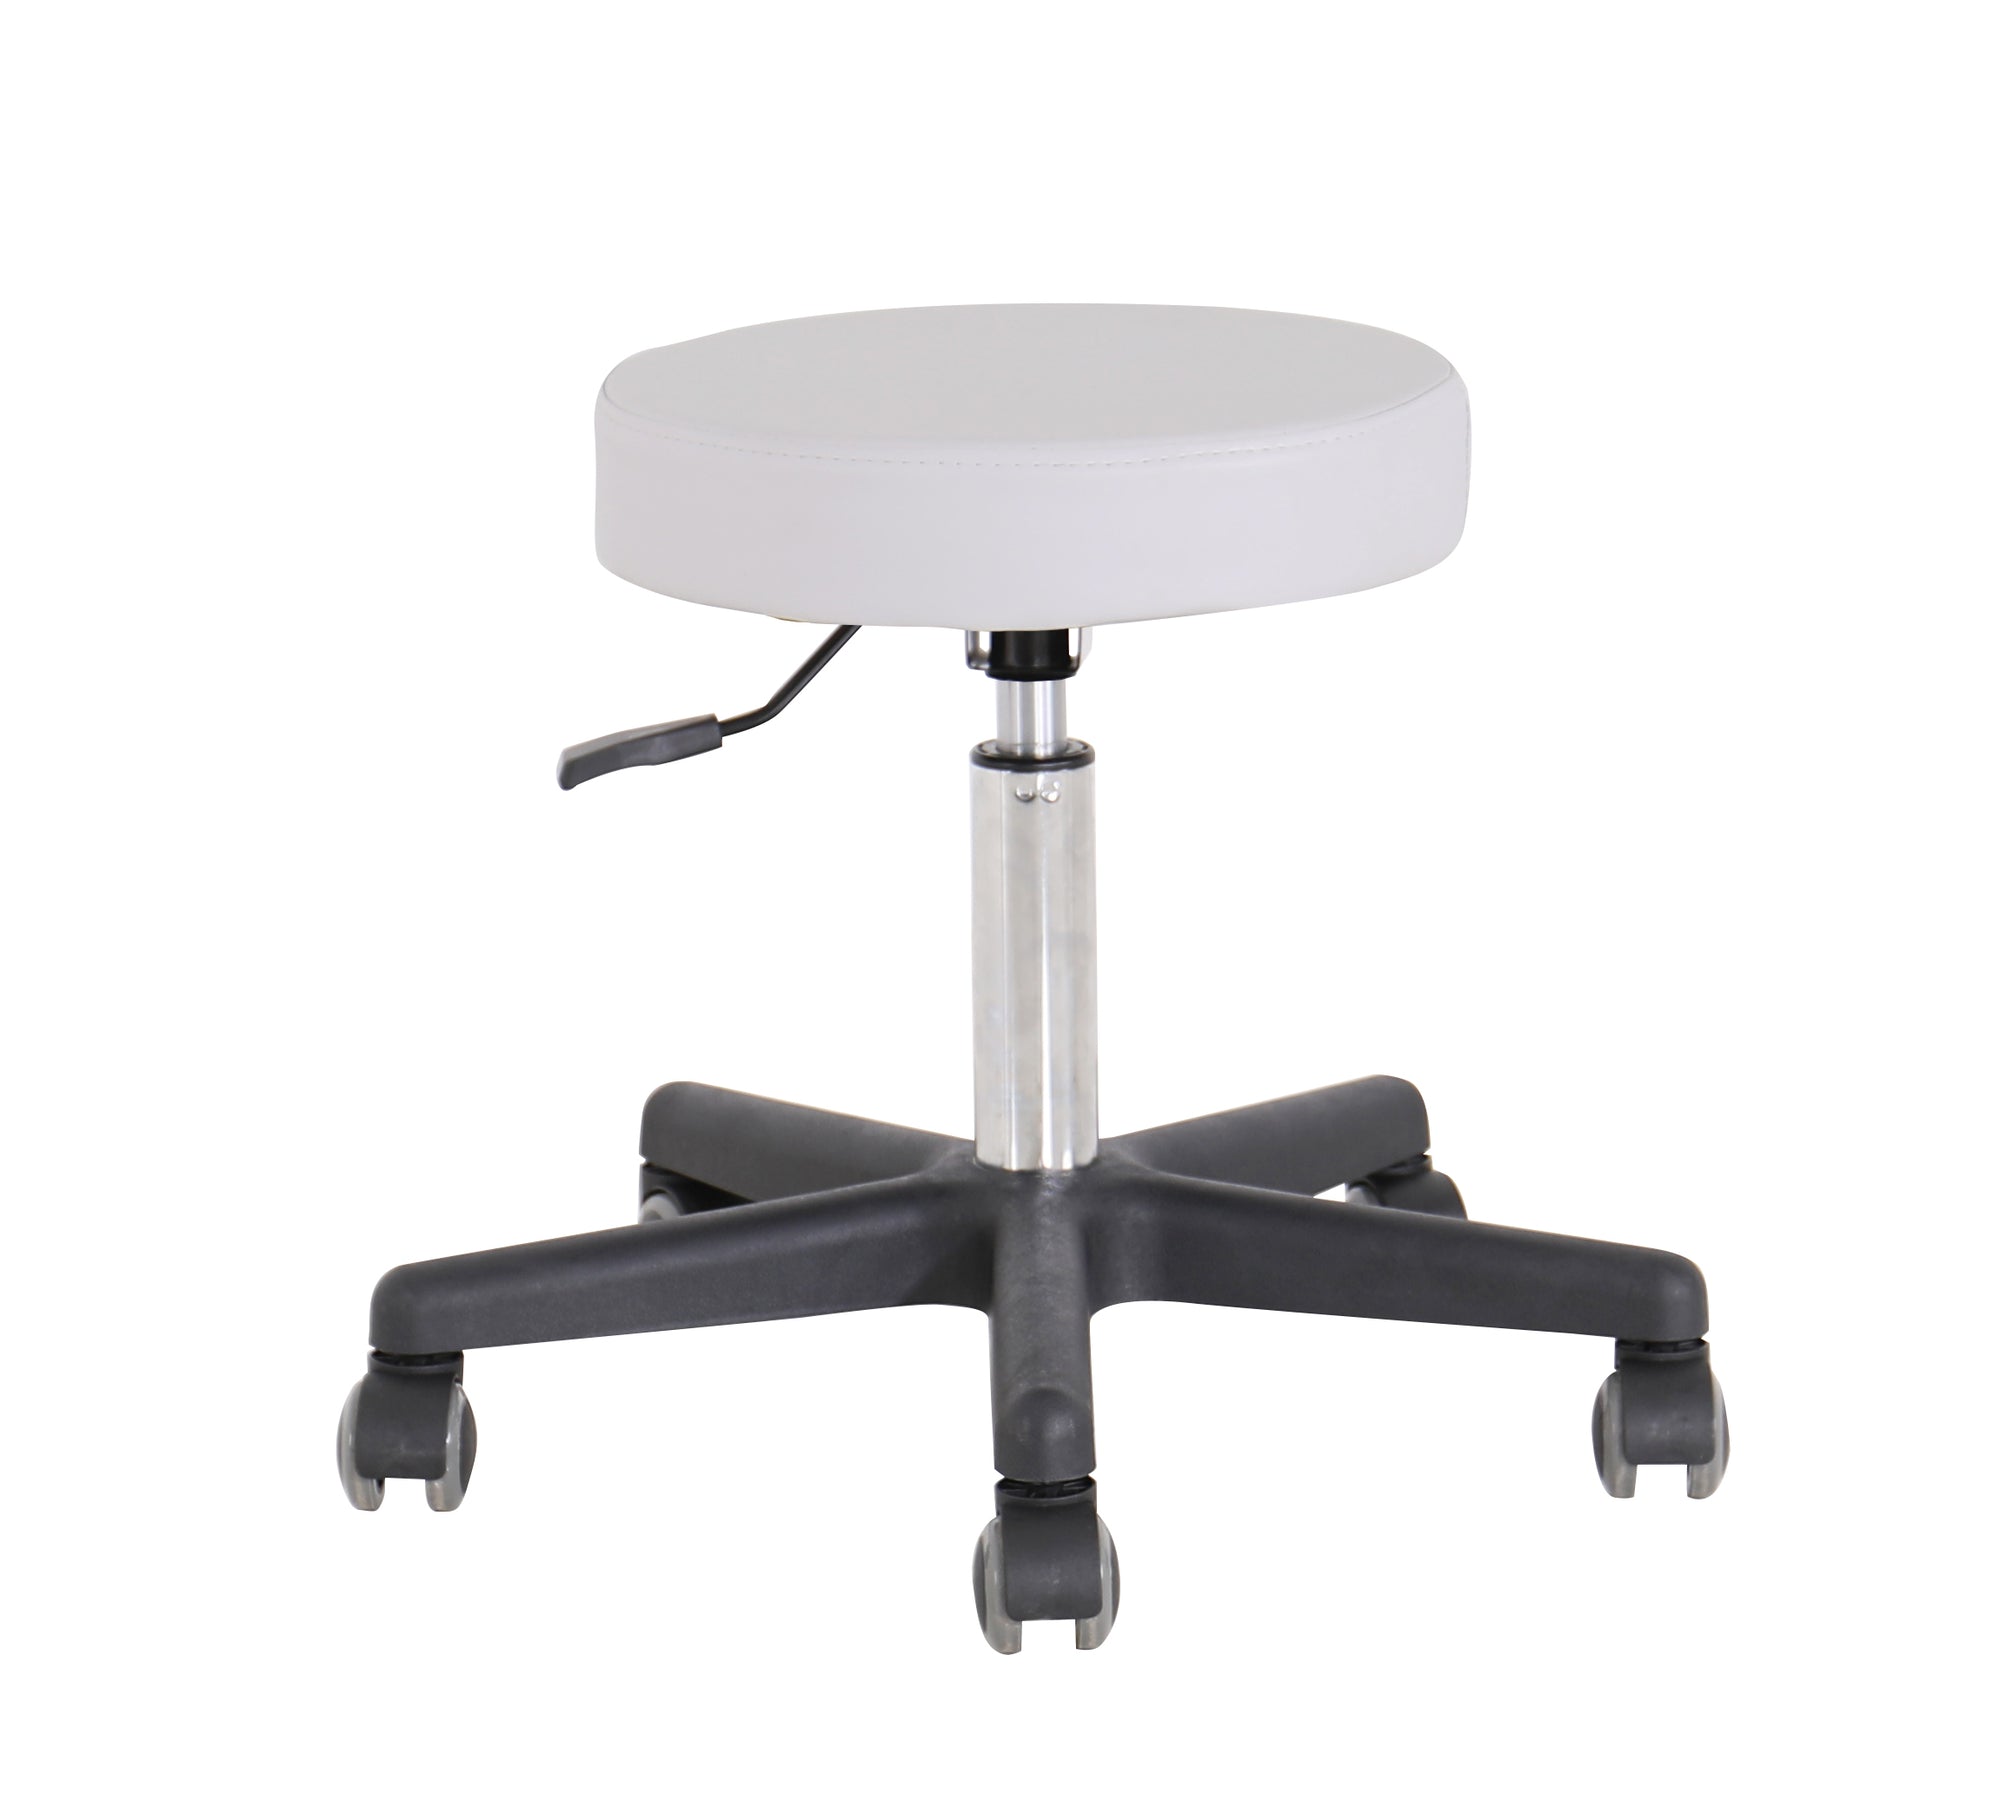 Round therapist gaslift stool - Colours: Black/ White